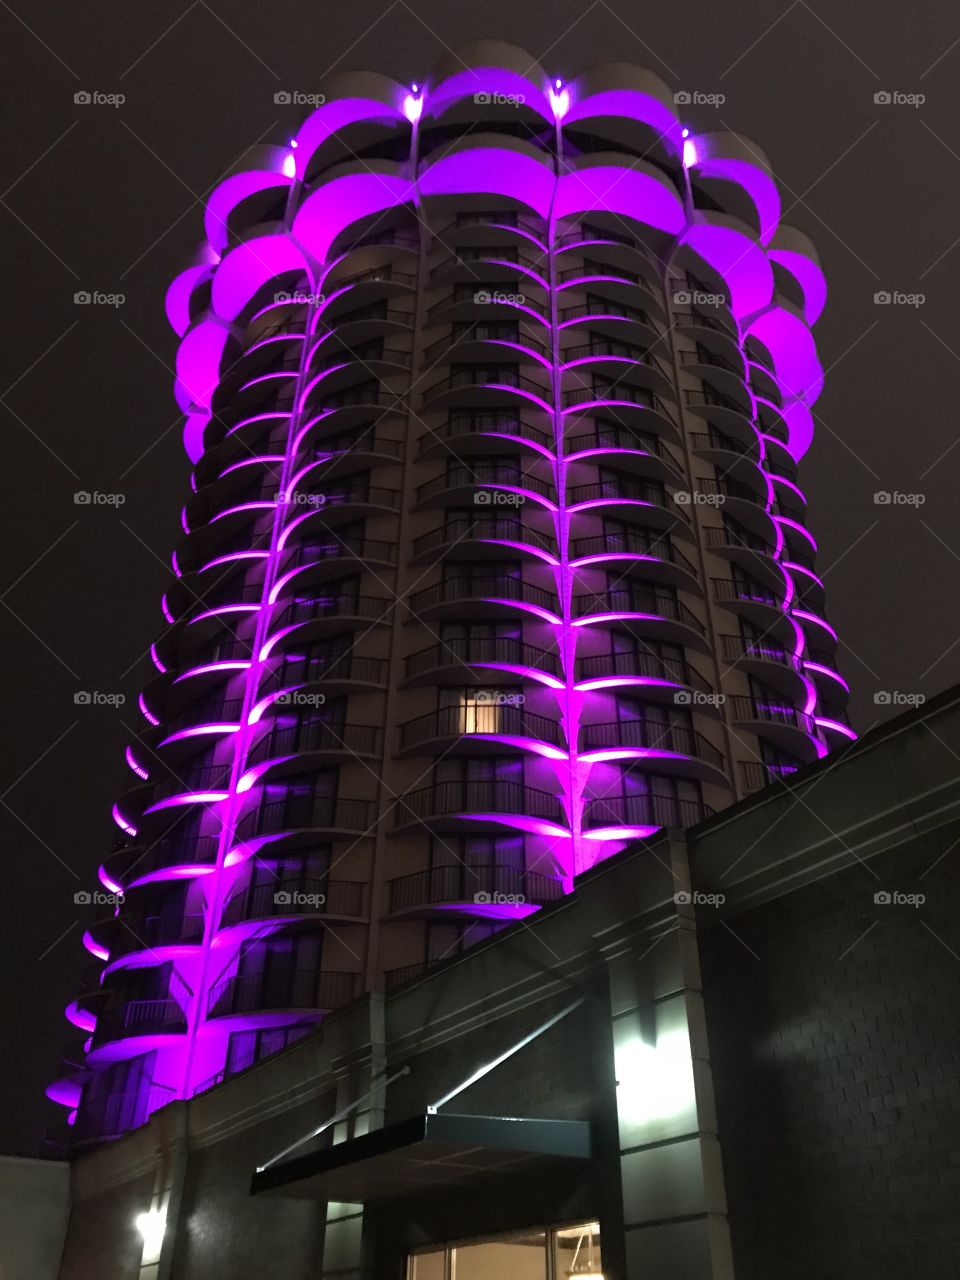 Radisson hotel in Kentucky lit in purple at night 